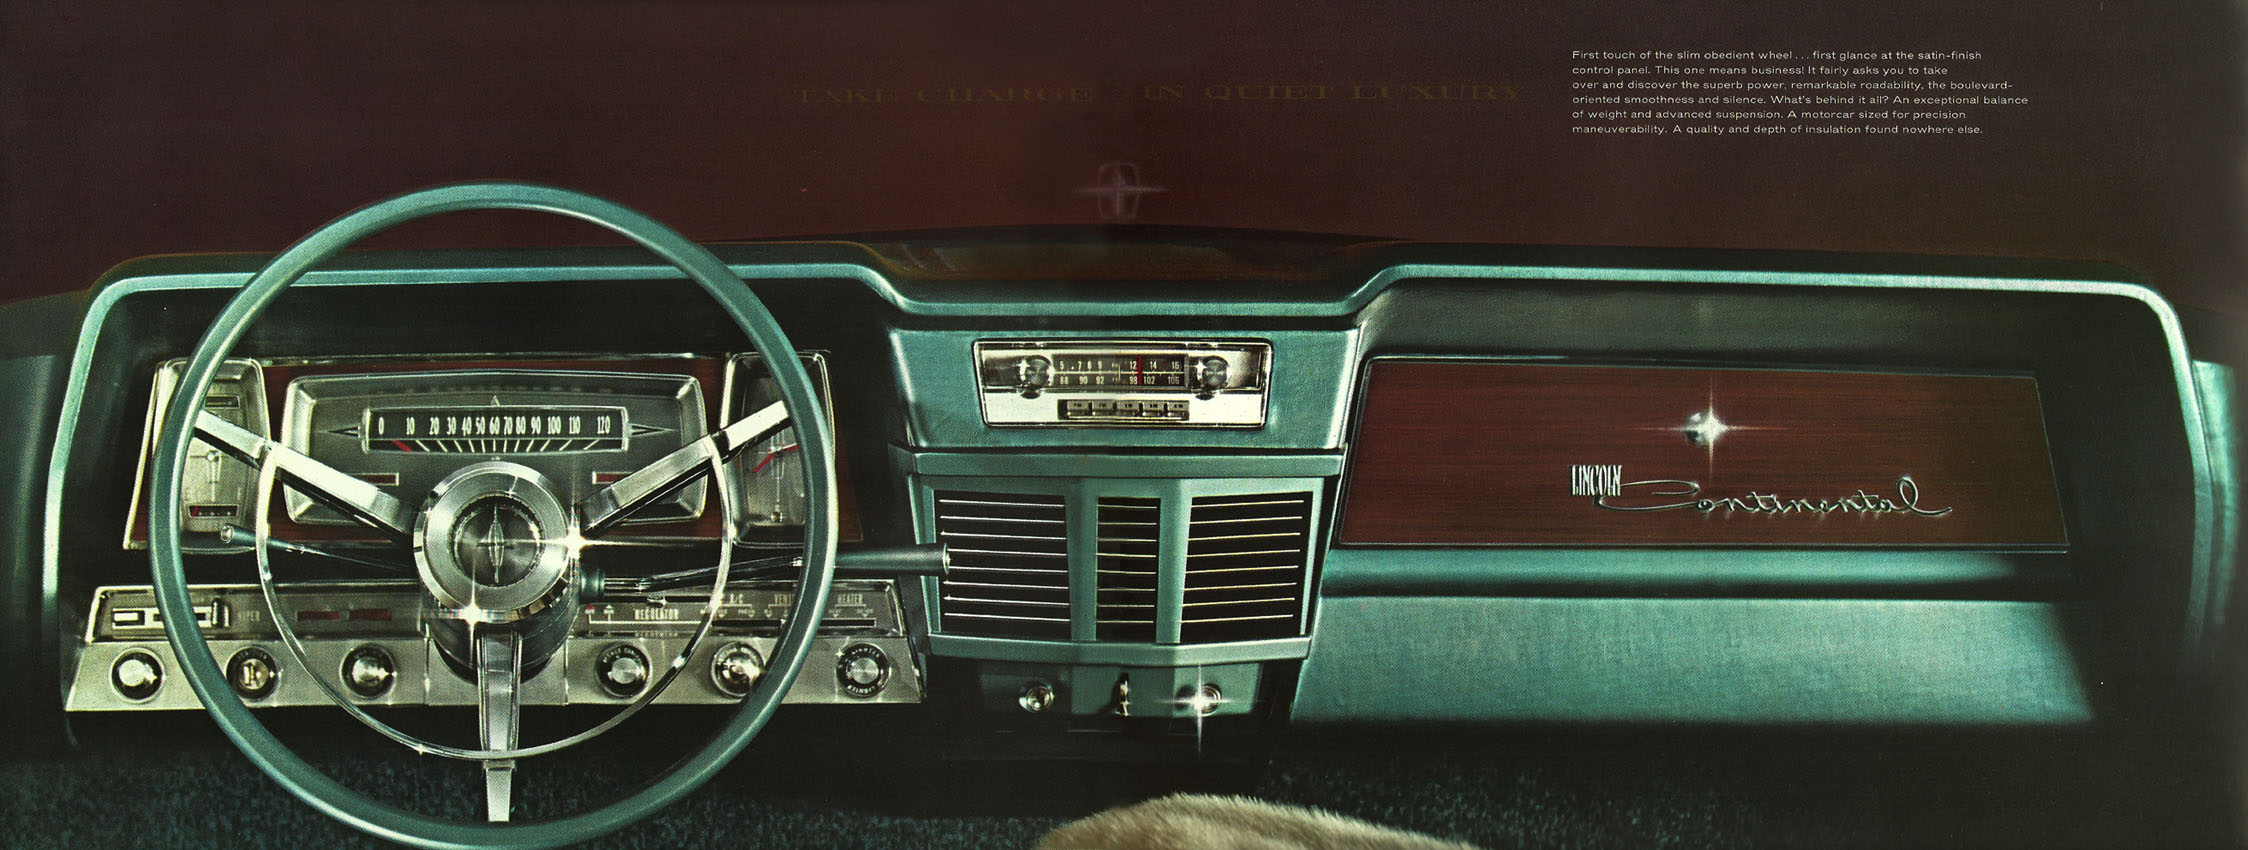 1963_Lincoln_Continental-10-11